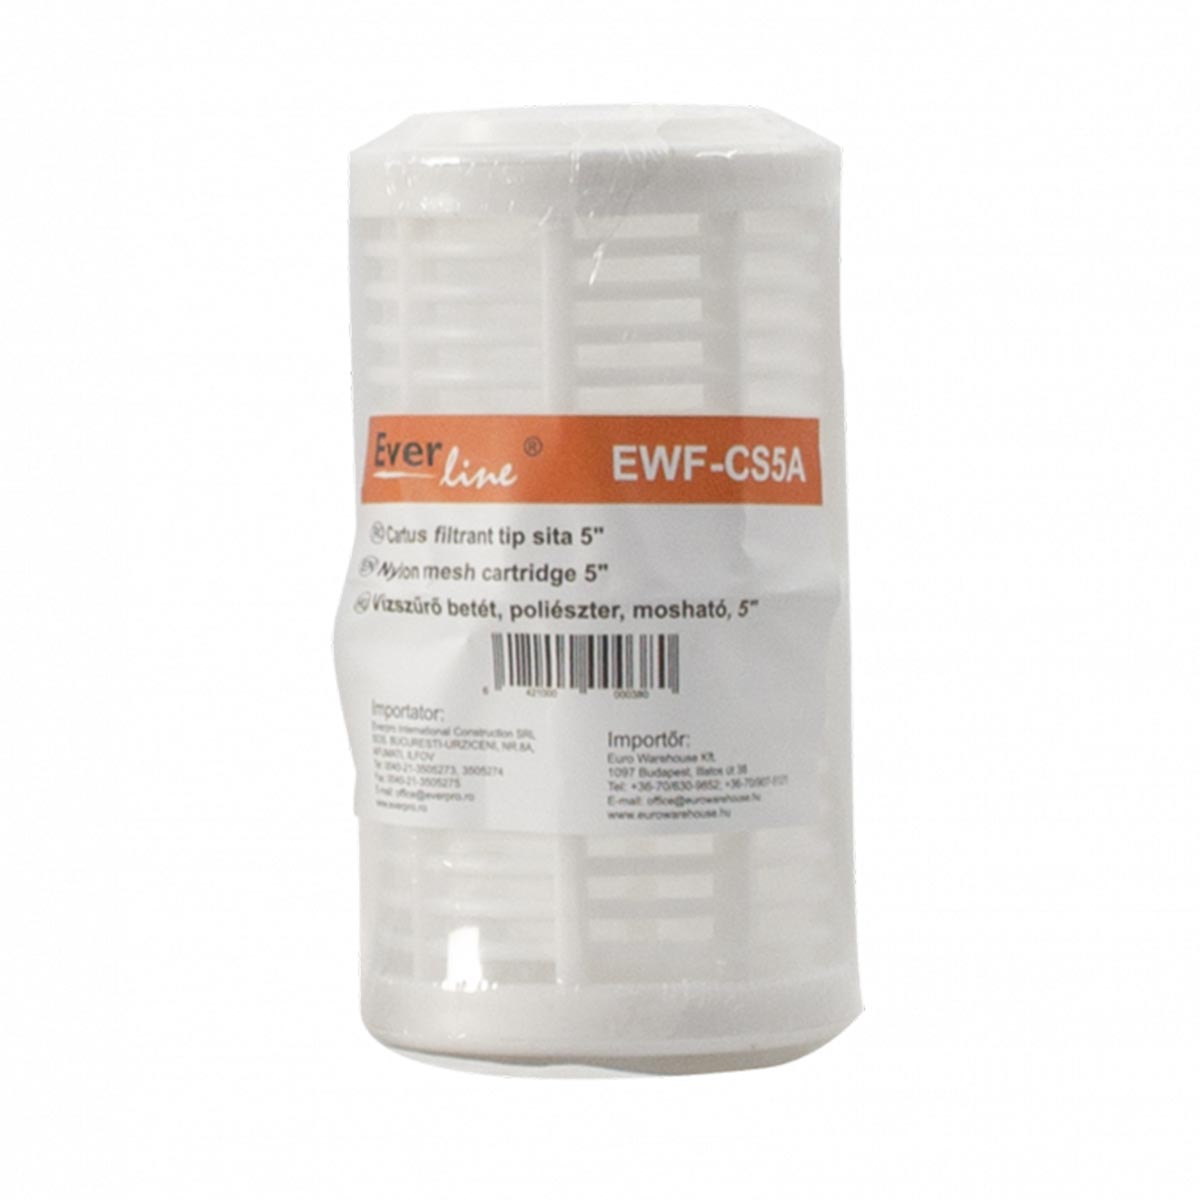 Cartus filtrant tip sita, lungime 5 Everline, EWF-CS5A